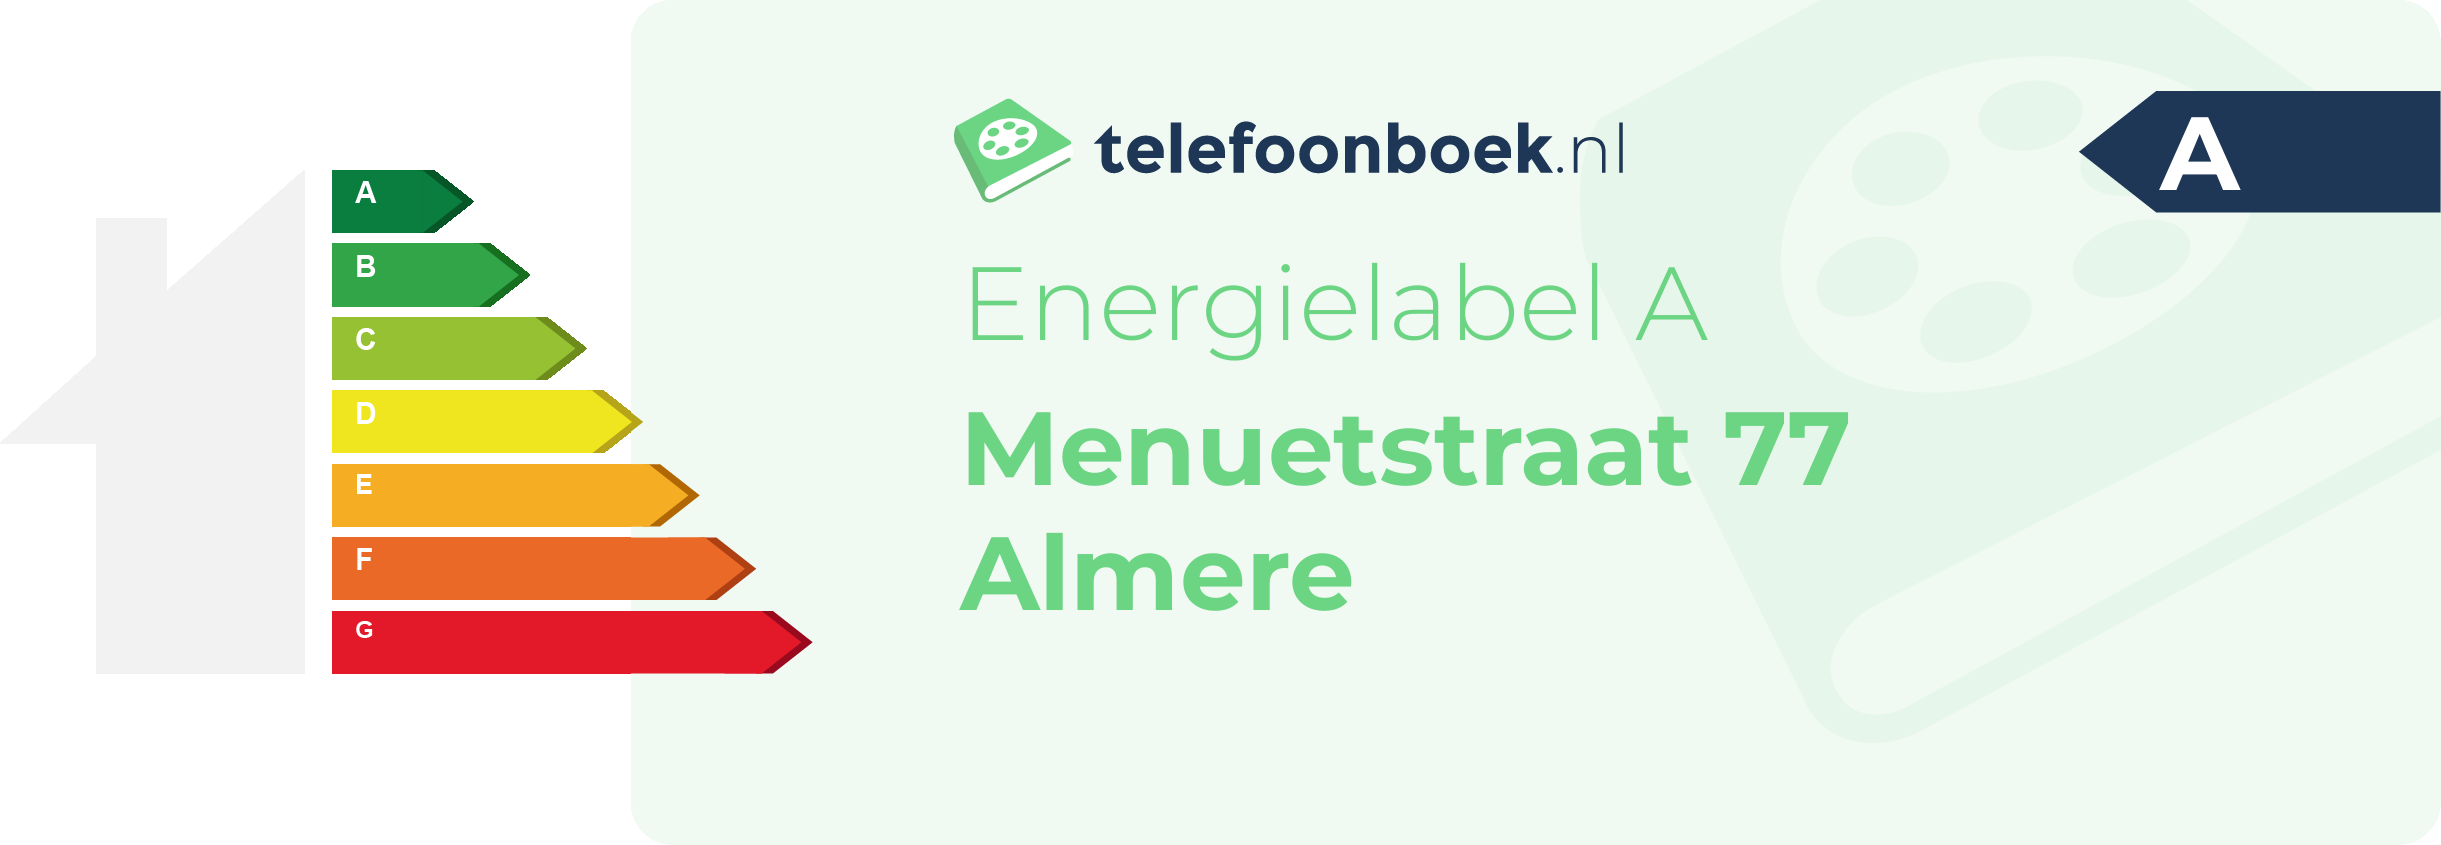 Energielabel Menuetstraat 77 Almere